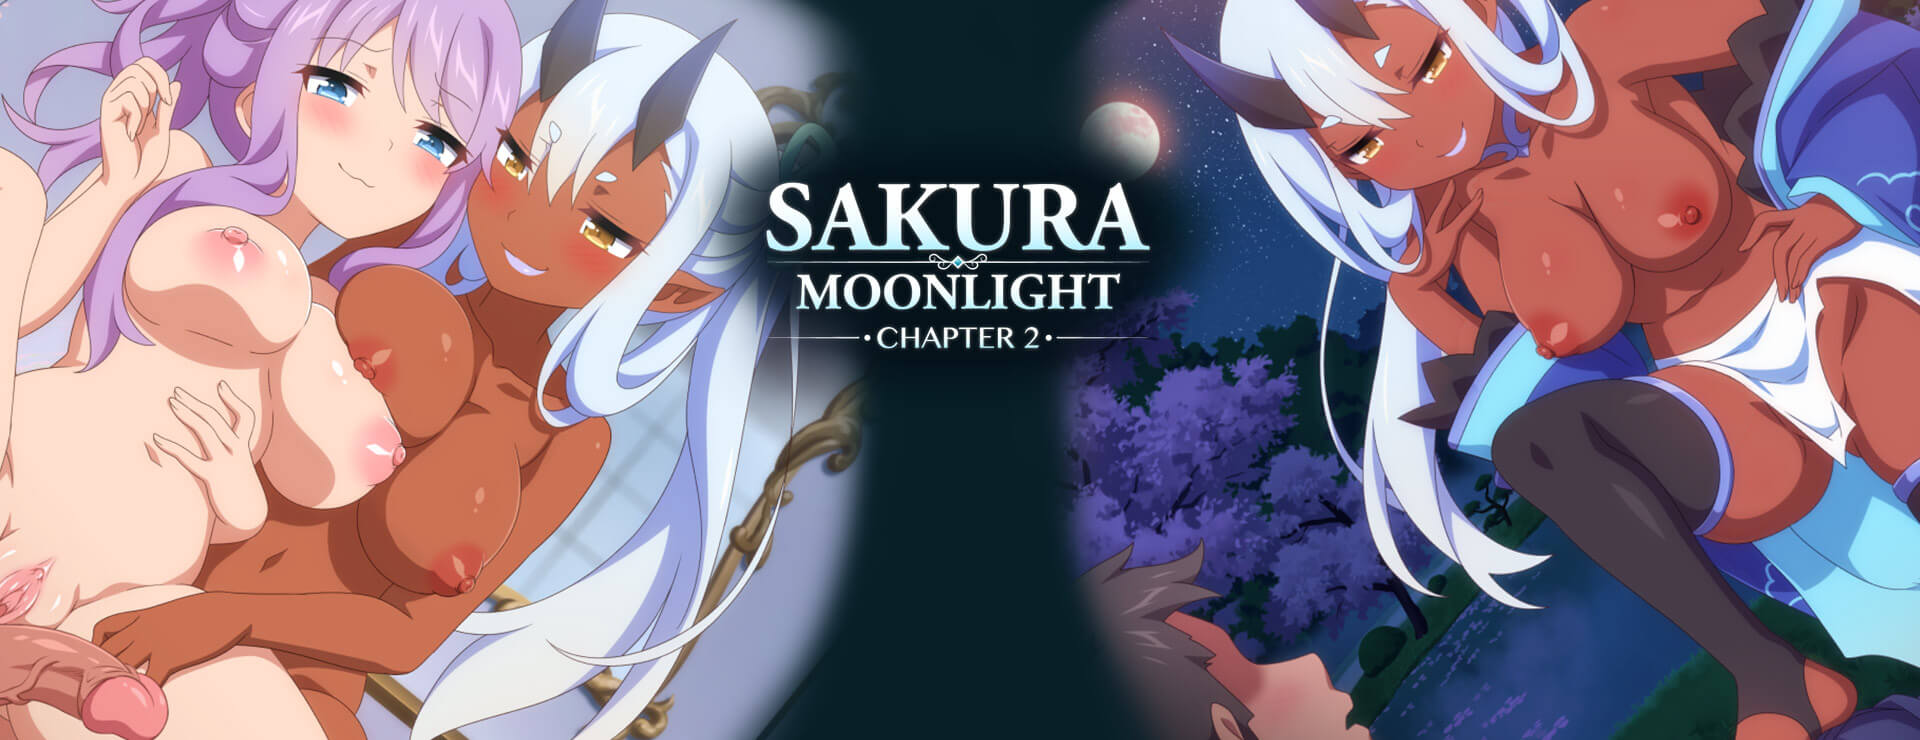 Sakura Moonlight Chapter 2 - Visual Novel Game